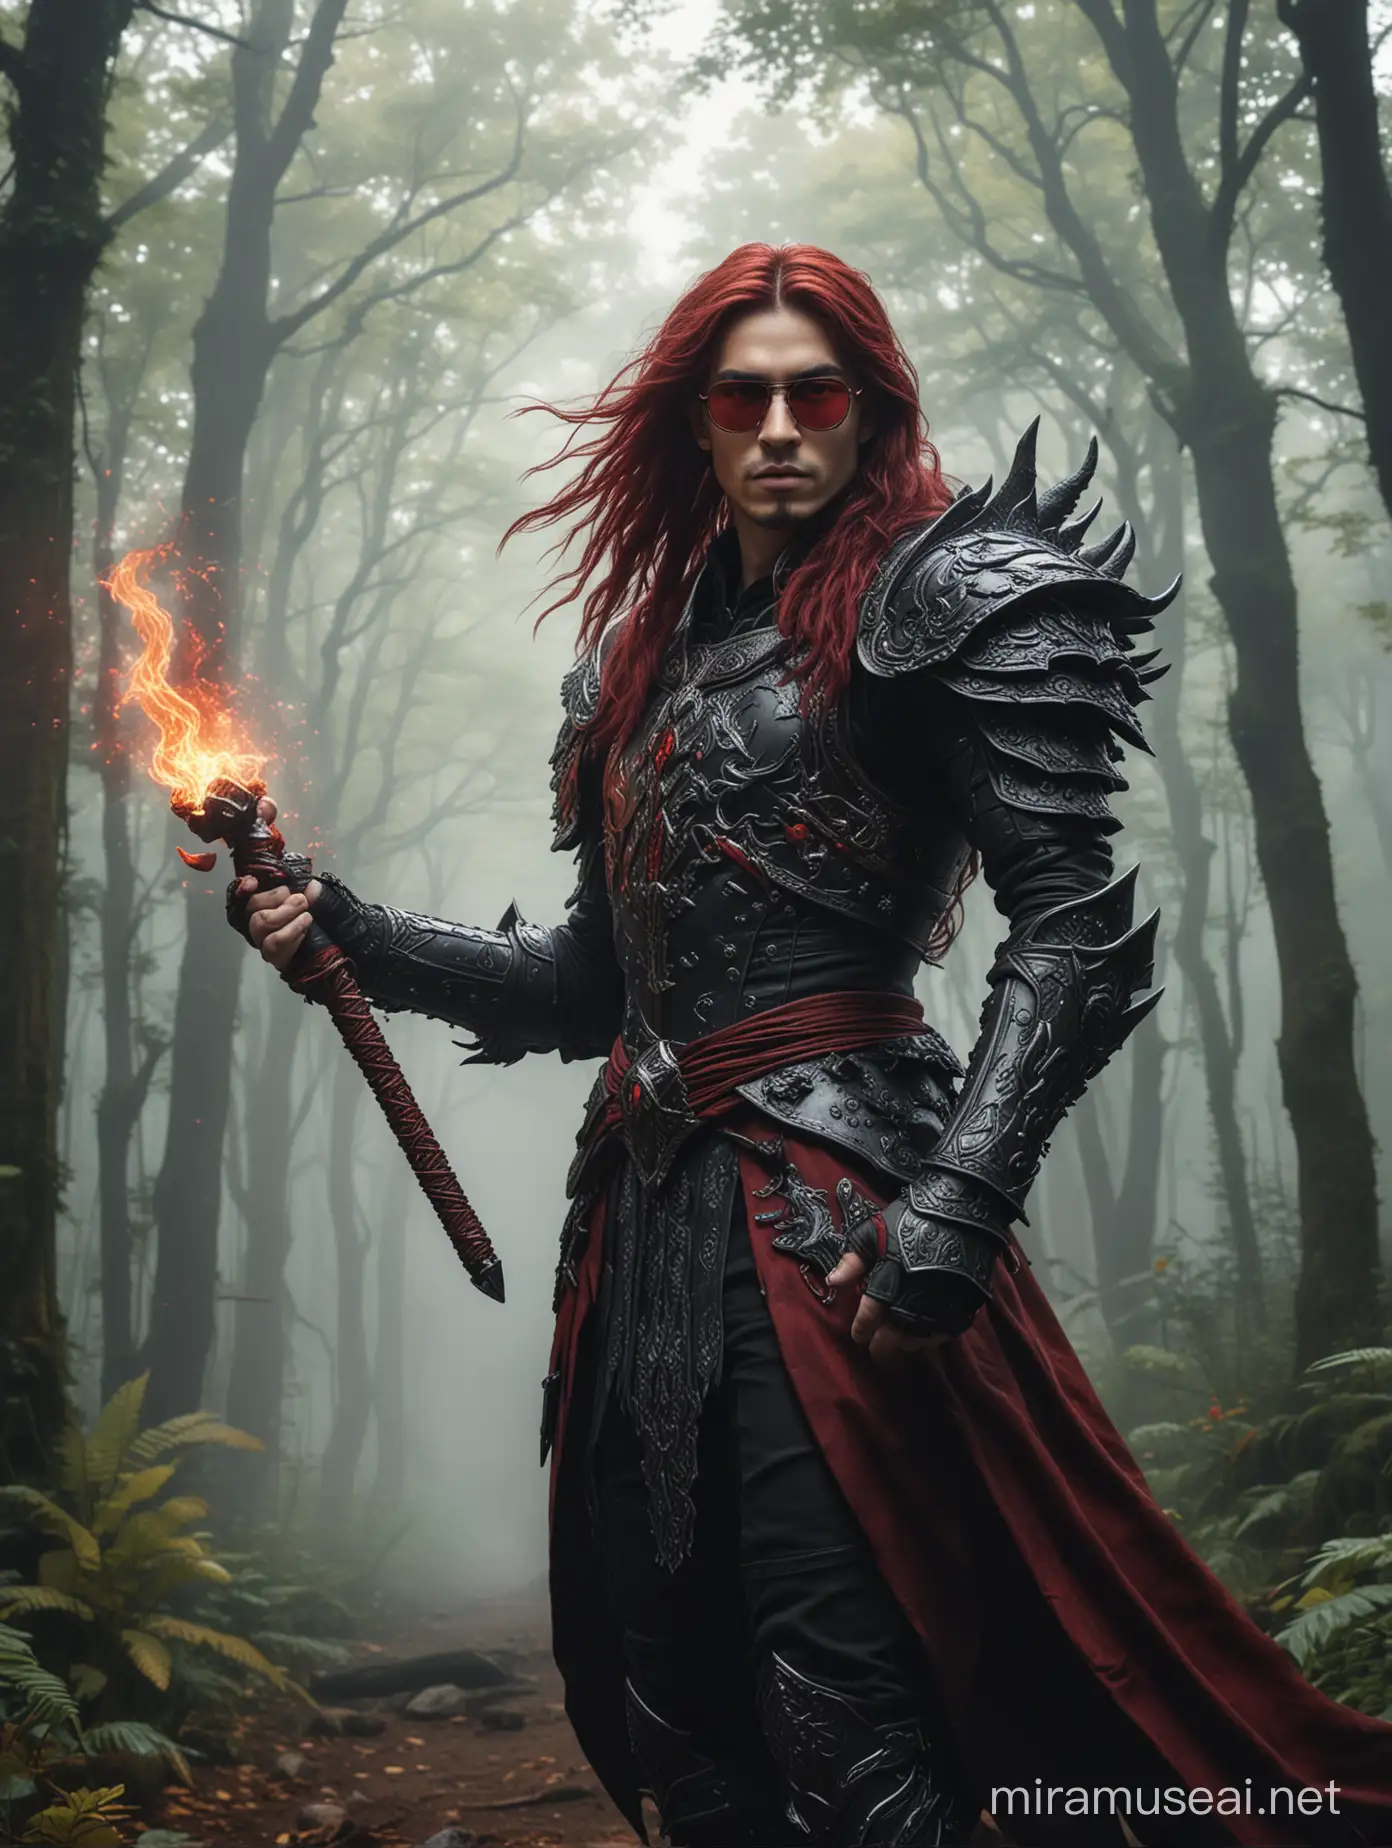 Male Dark Magic Sorcerer Controlling Fiery Dragon in Enchanted Forest